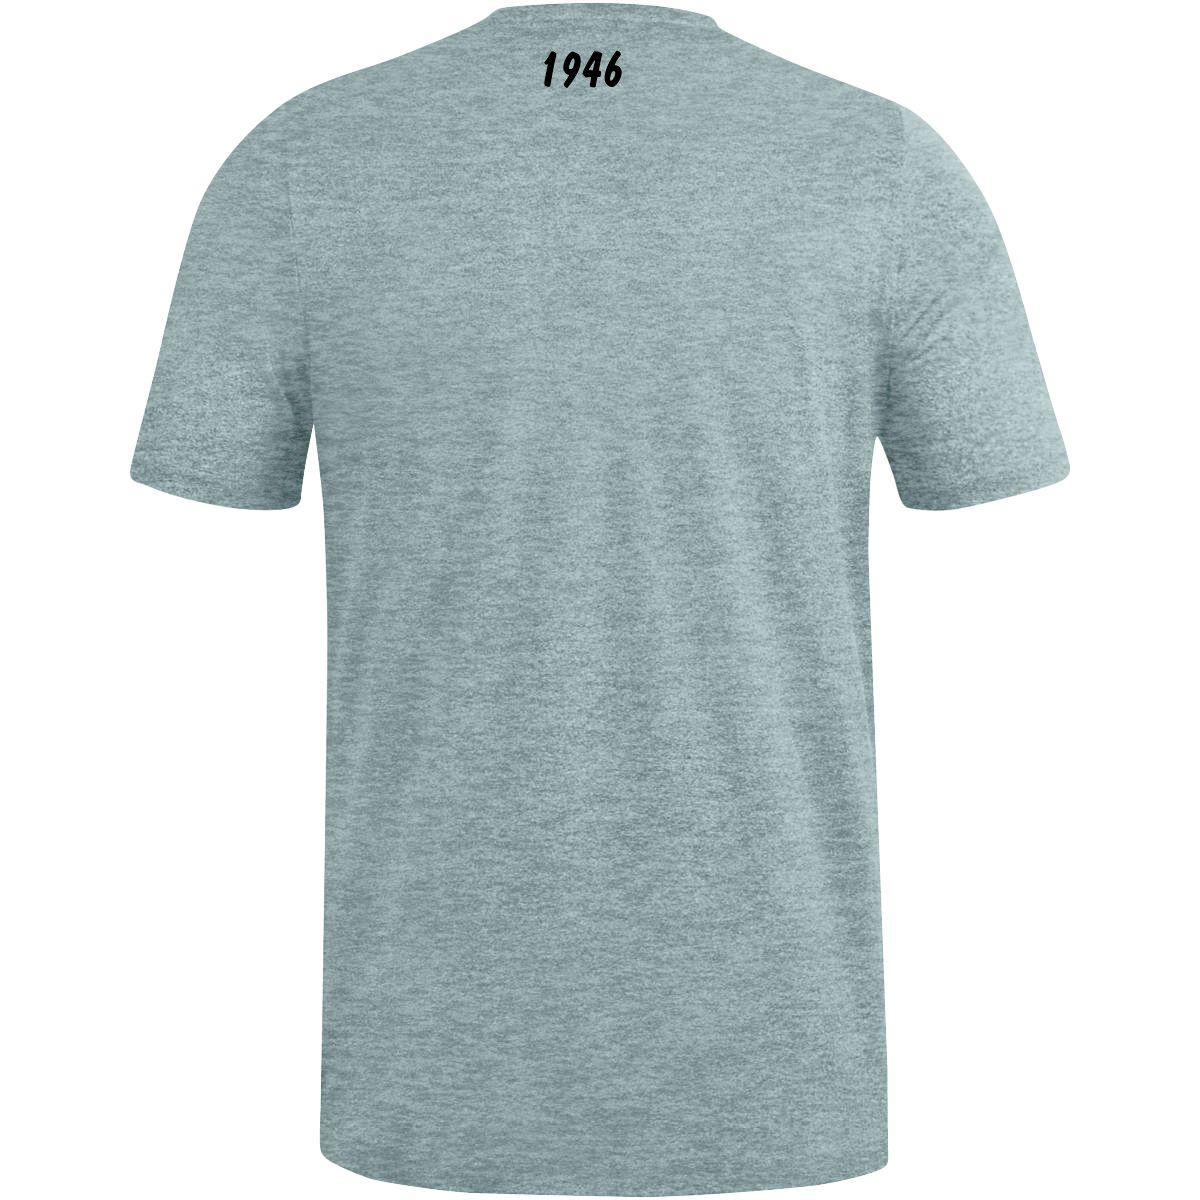 SCSV 1946 Damen T-Shirt Premium